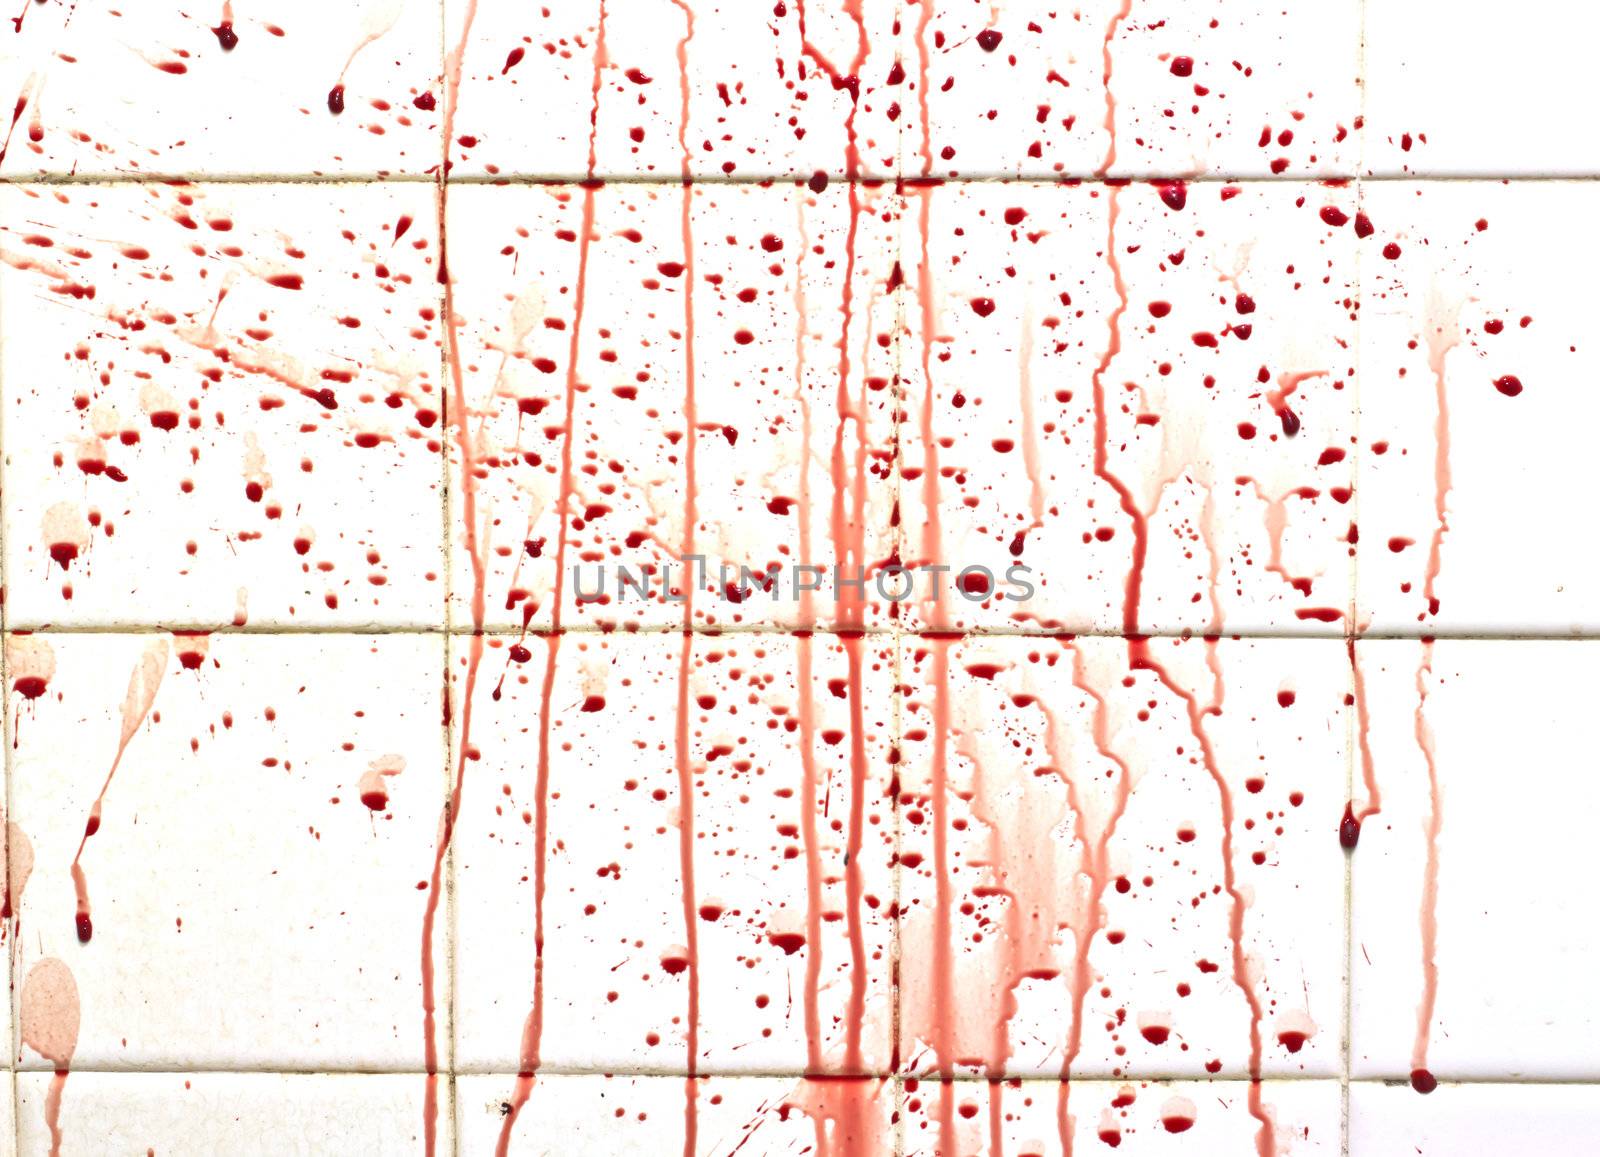 blood with streaks on bathroom tiles  by kurapy